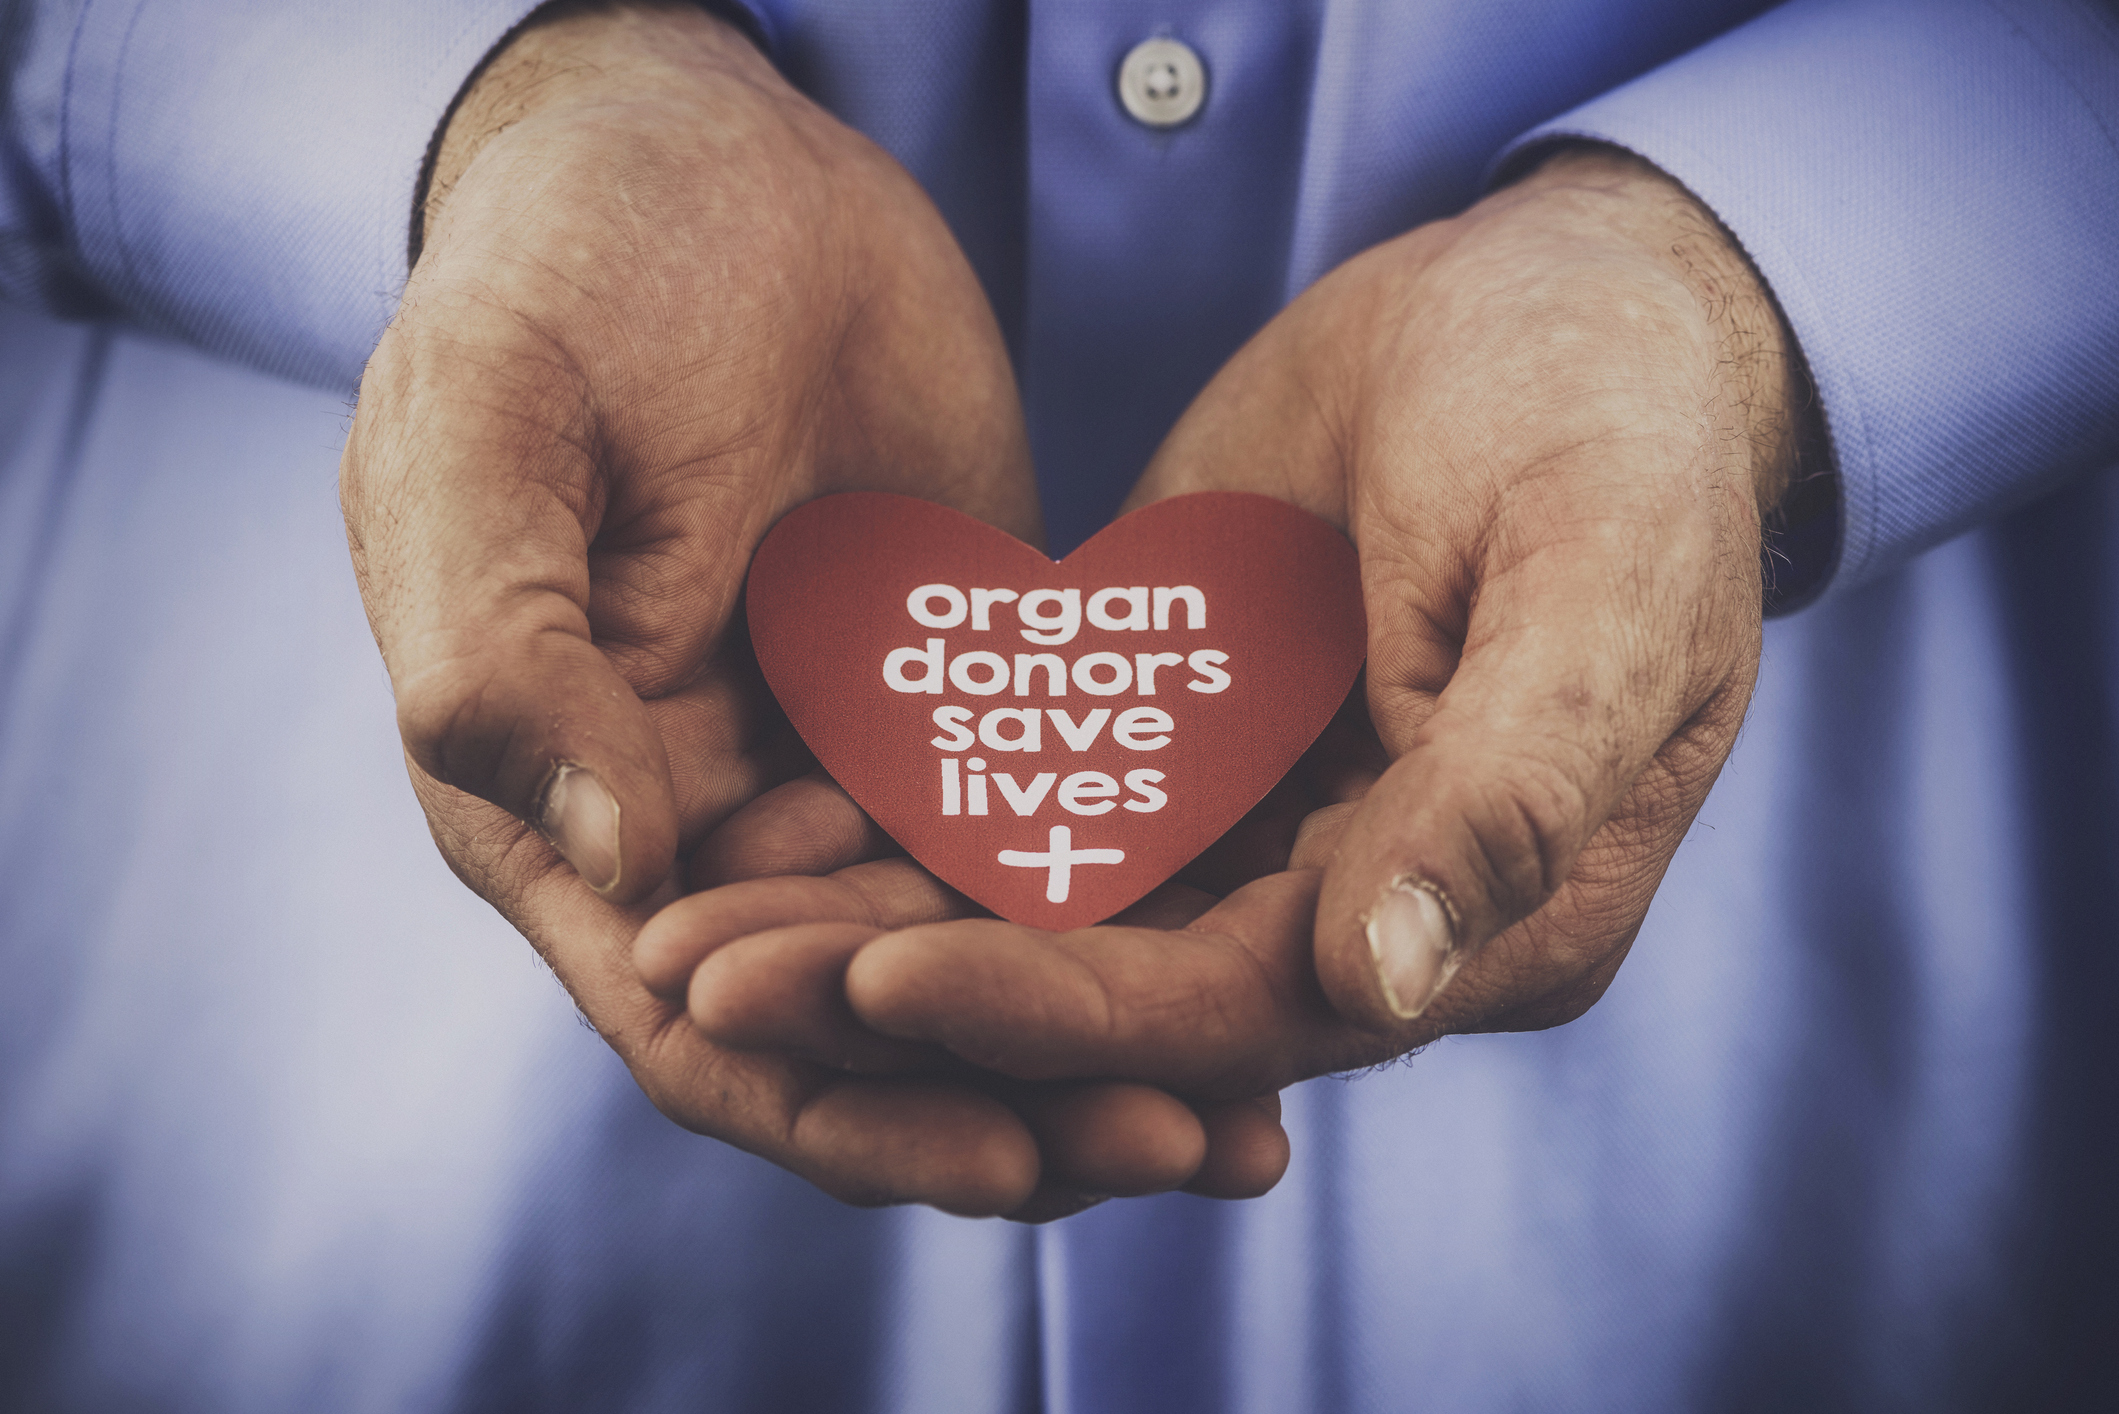 why be an organ donor persuasive speech